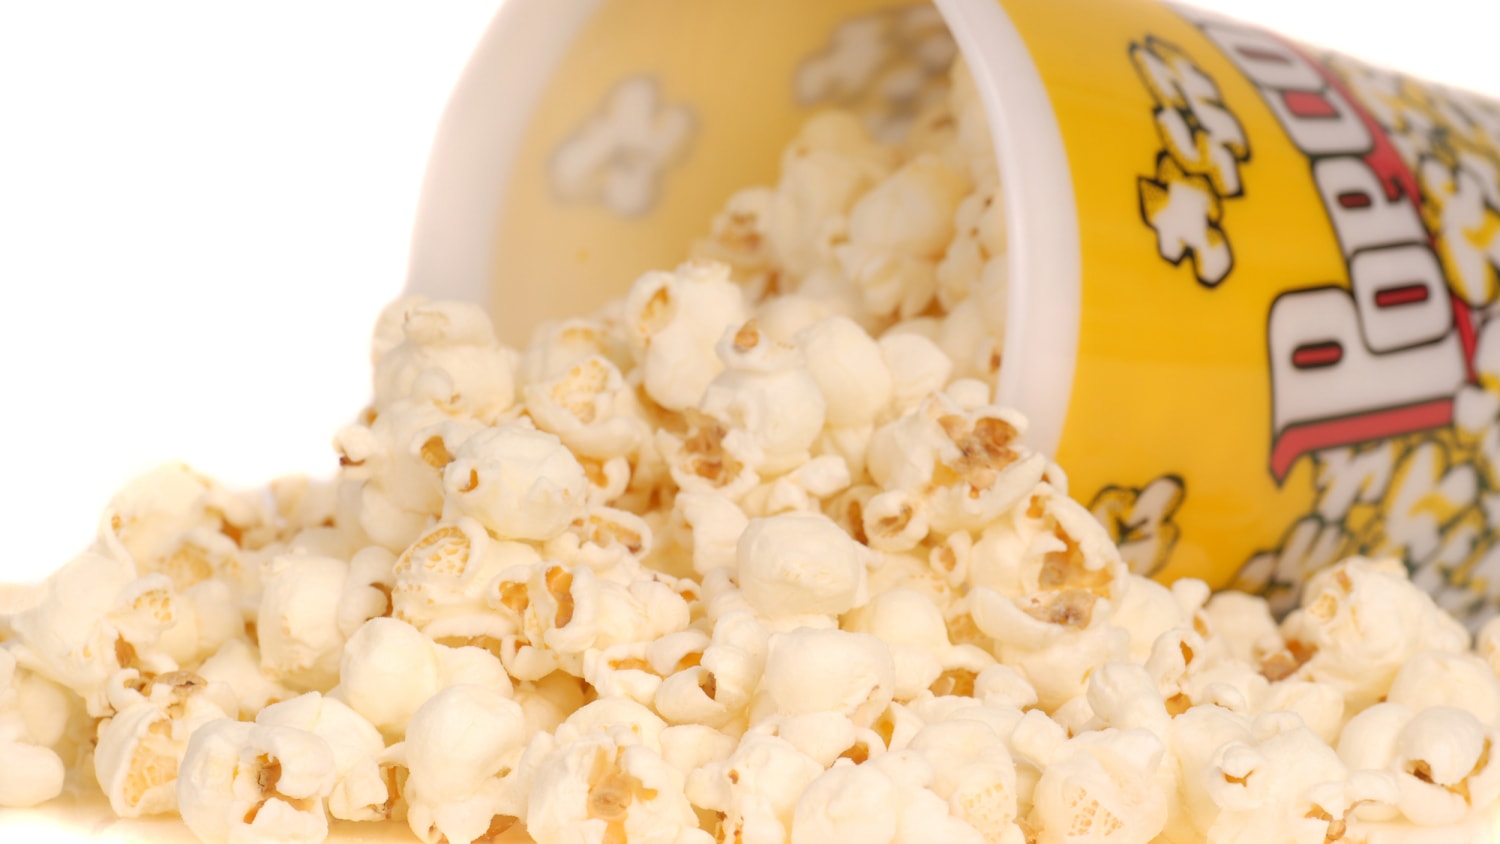 Popcorn as healthy as veggies? Depends how pop it